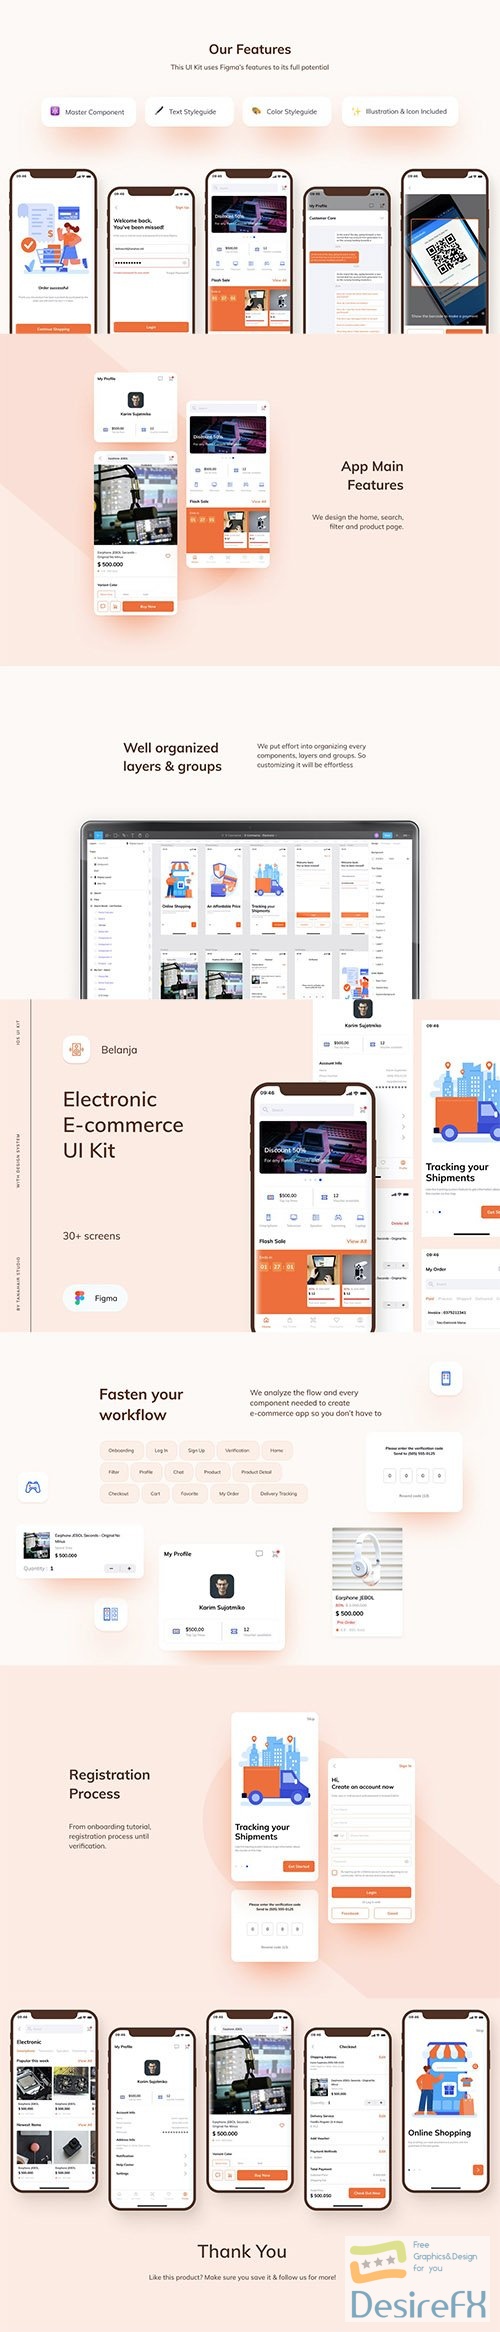 Belanja - Electronic E-commerce UI Kit